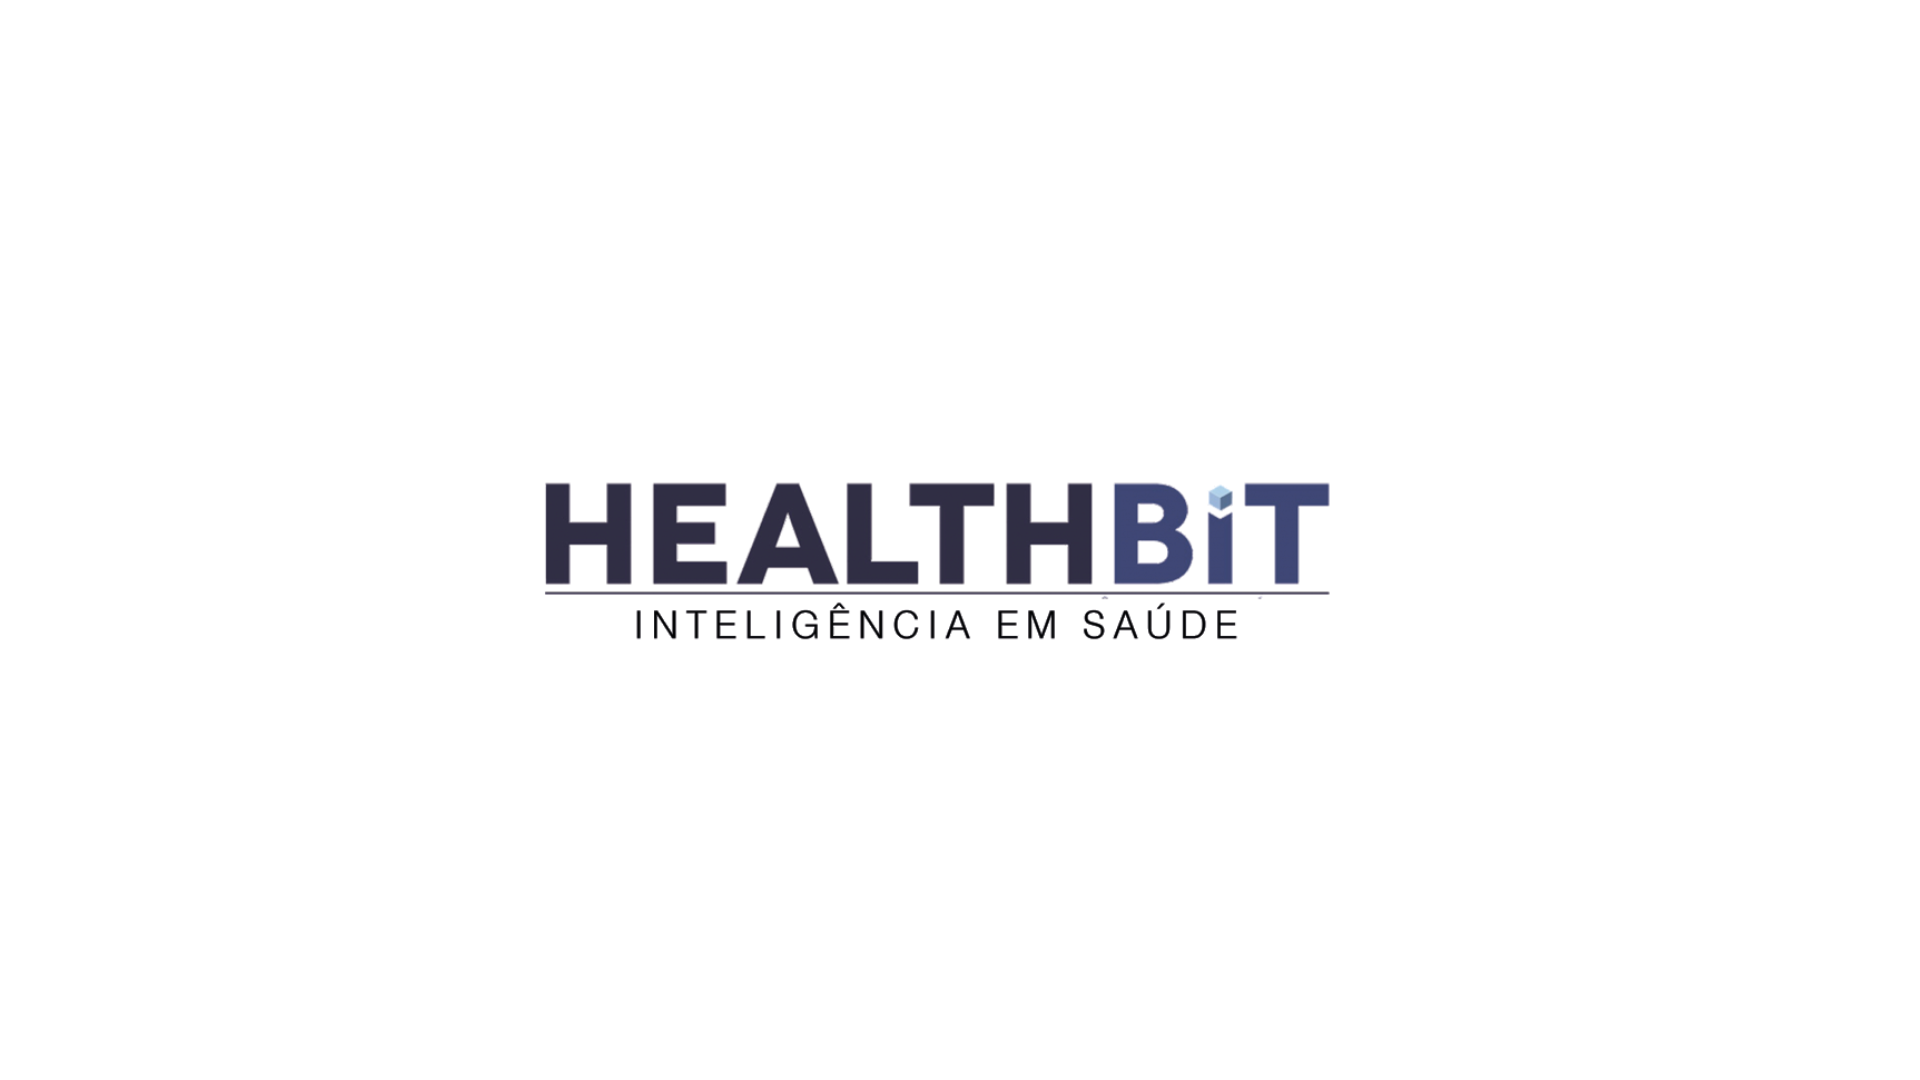 Healthbit